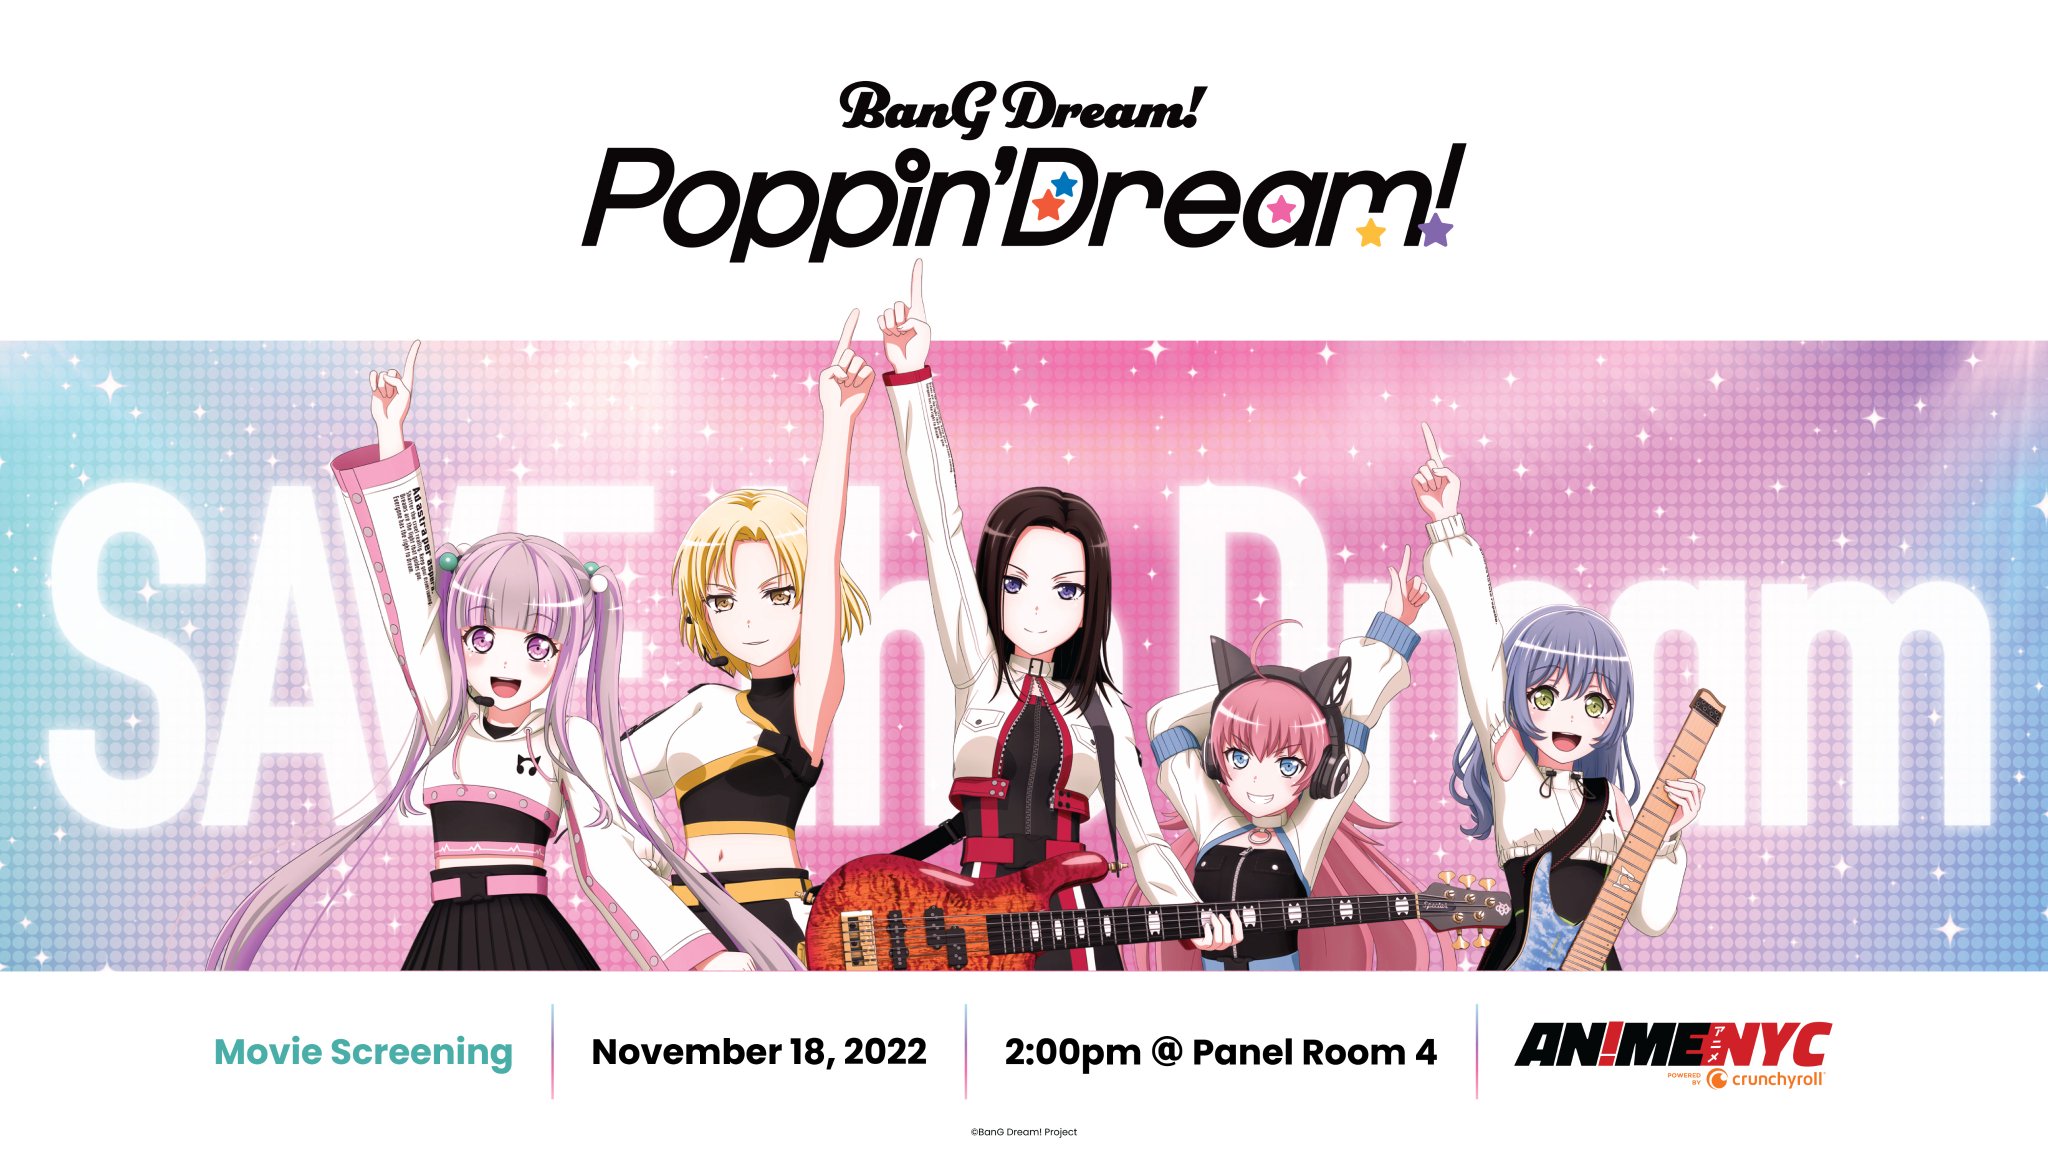 Poppin’ Dream